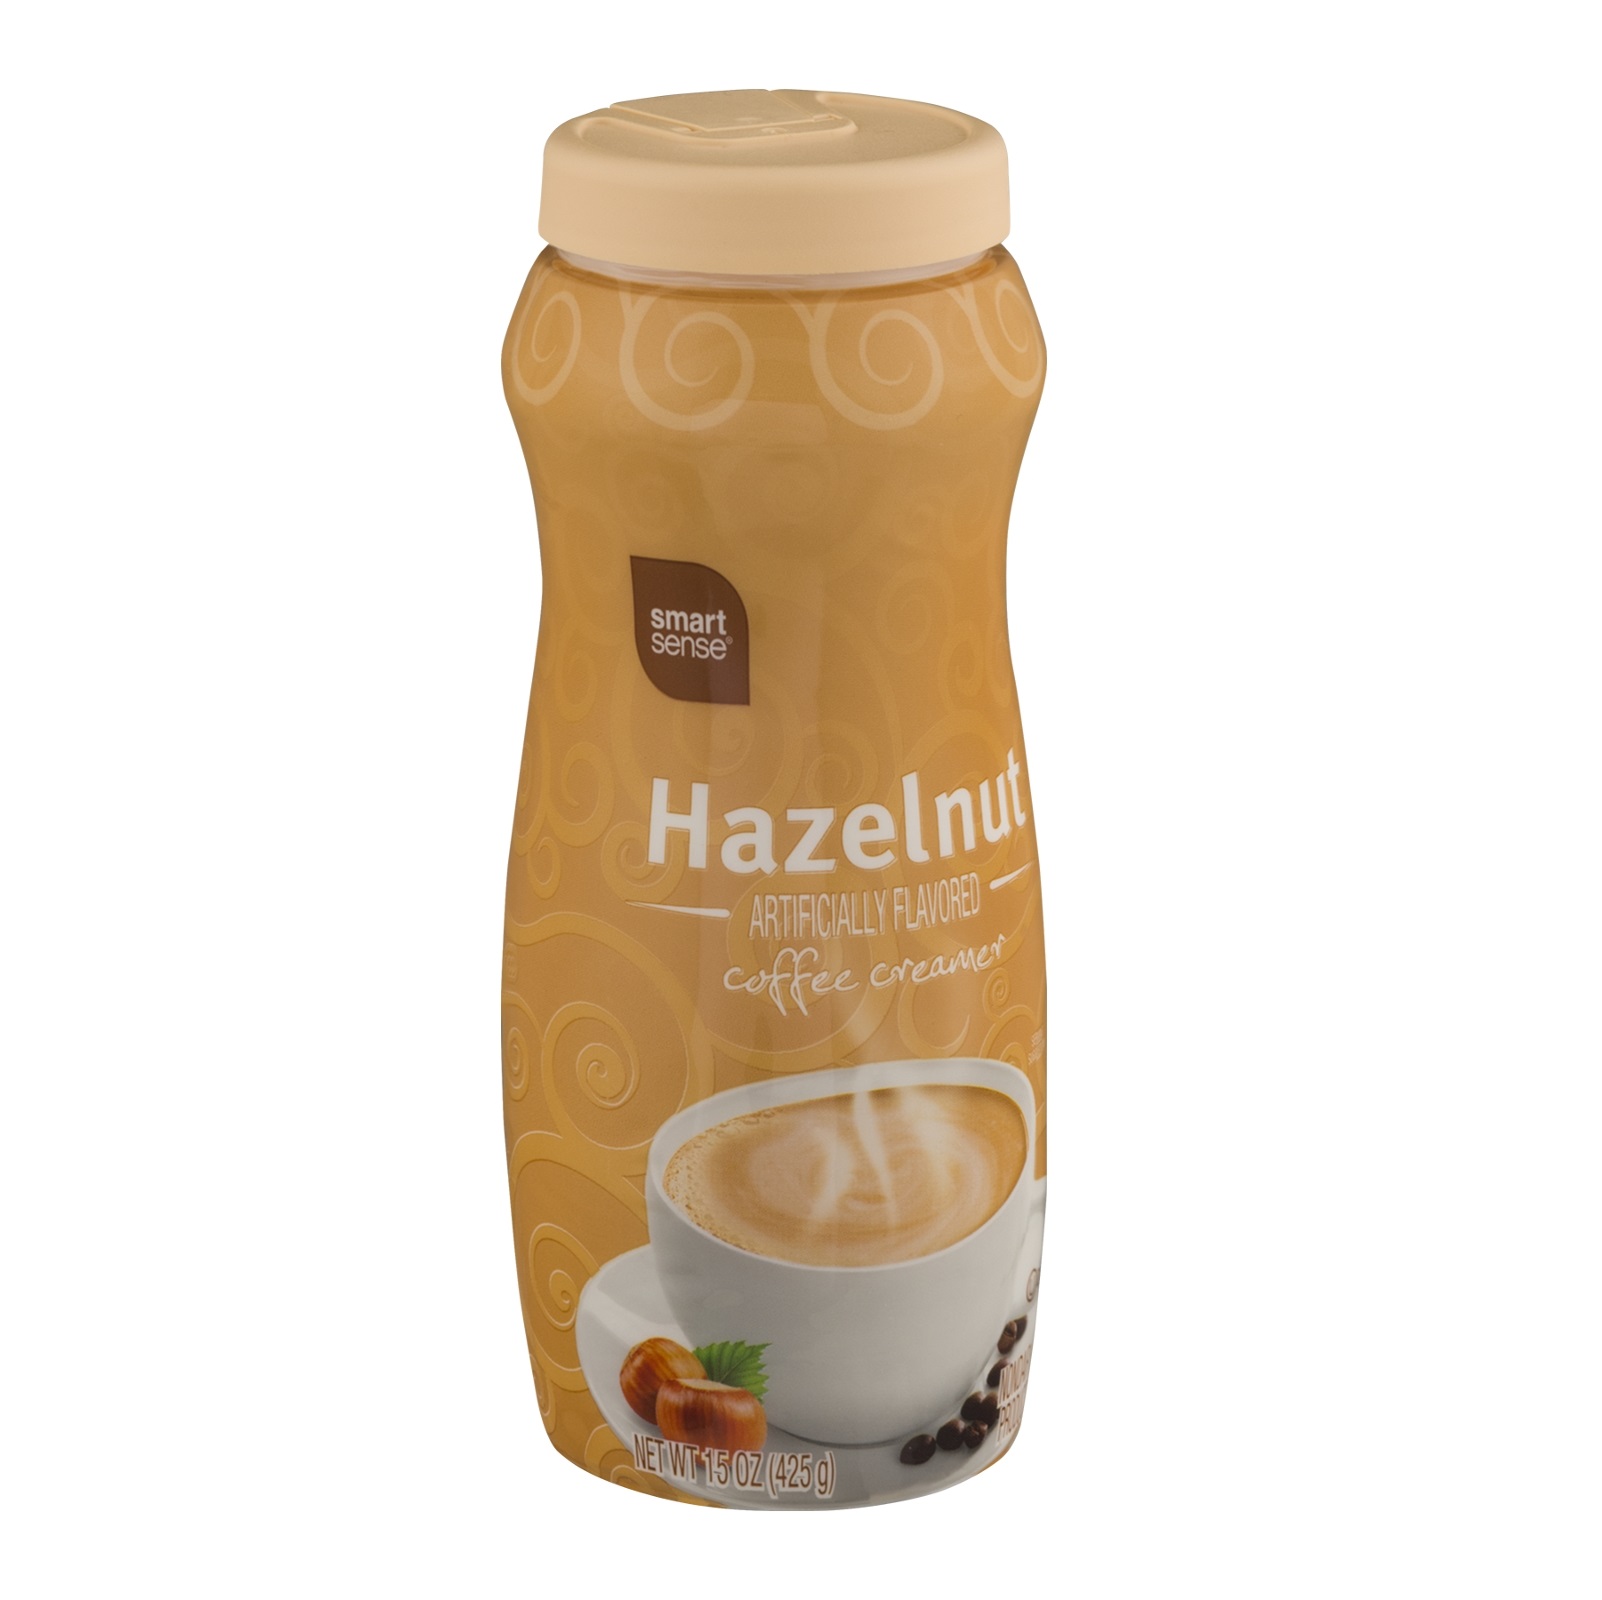 Smart Sense Hazelnut Coffee Creamer Food Product Image